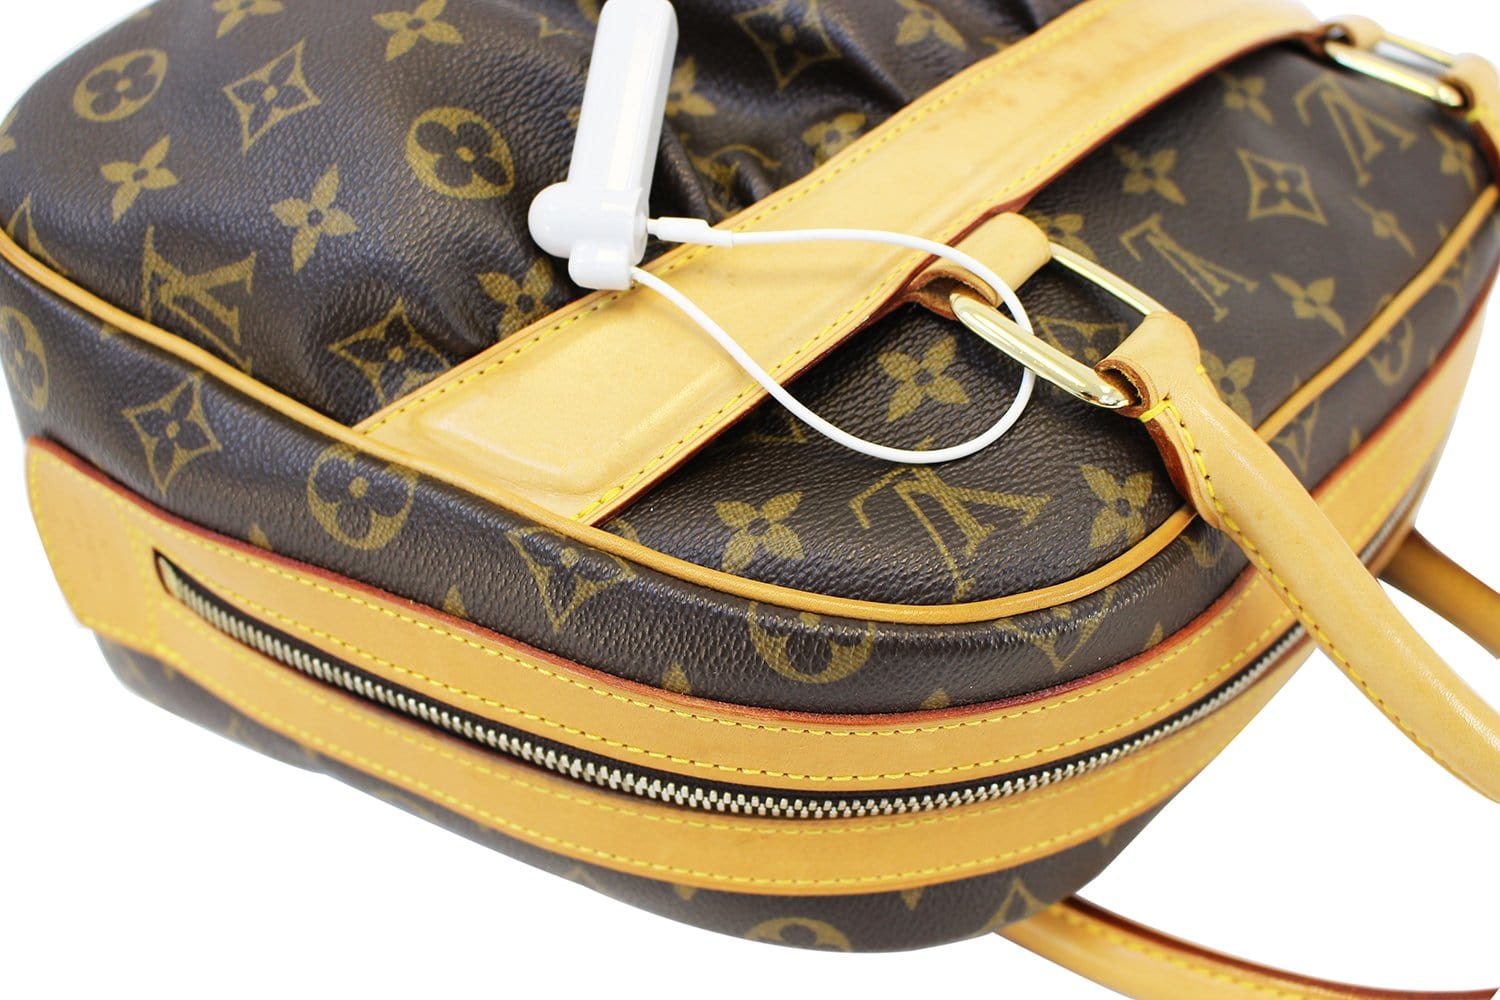 Cose Belle - JUST IN!! Louis Vuitton Monogram Mizi Handbag! Cose